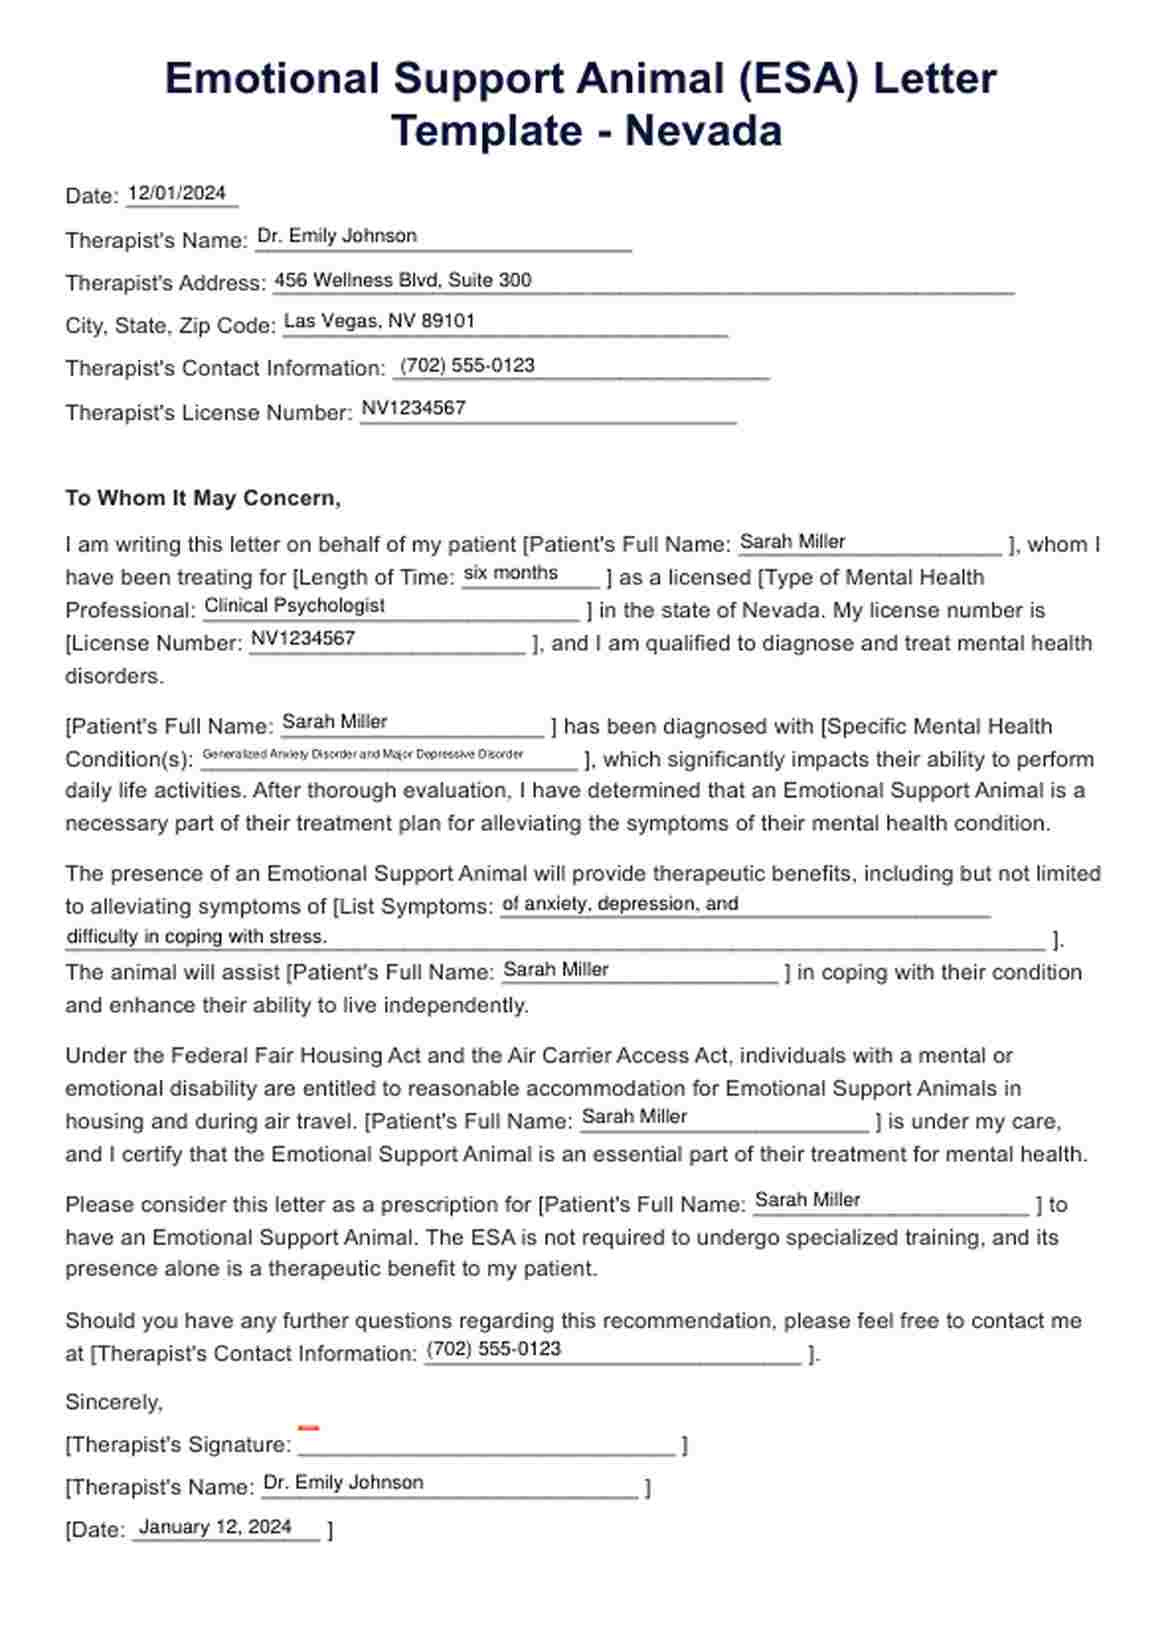 ESA Letter Nevada PDF Example